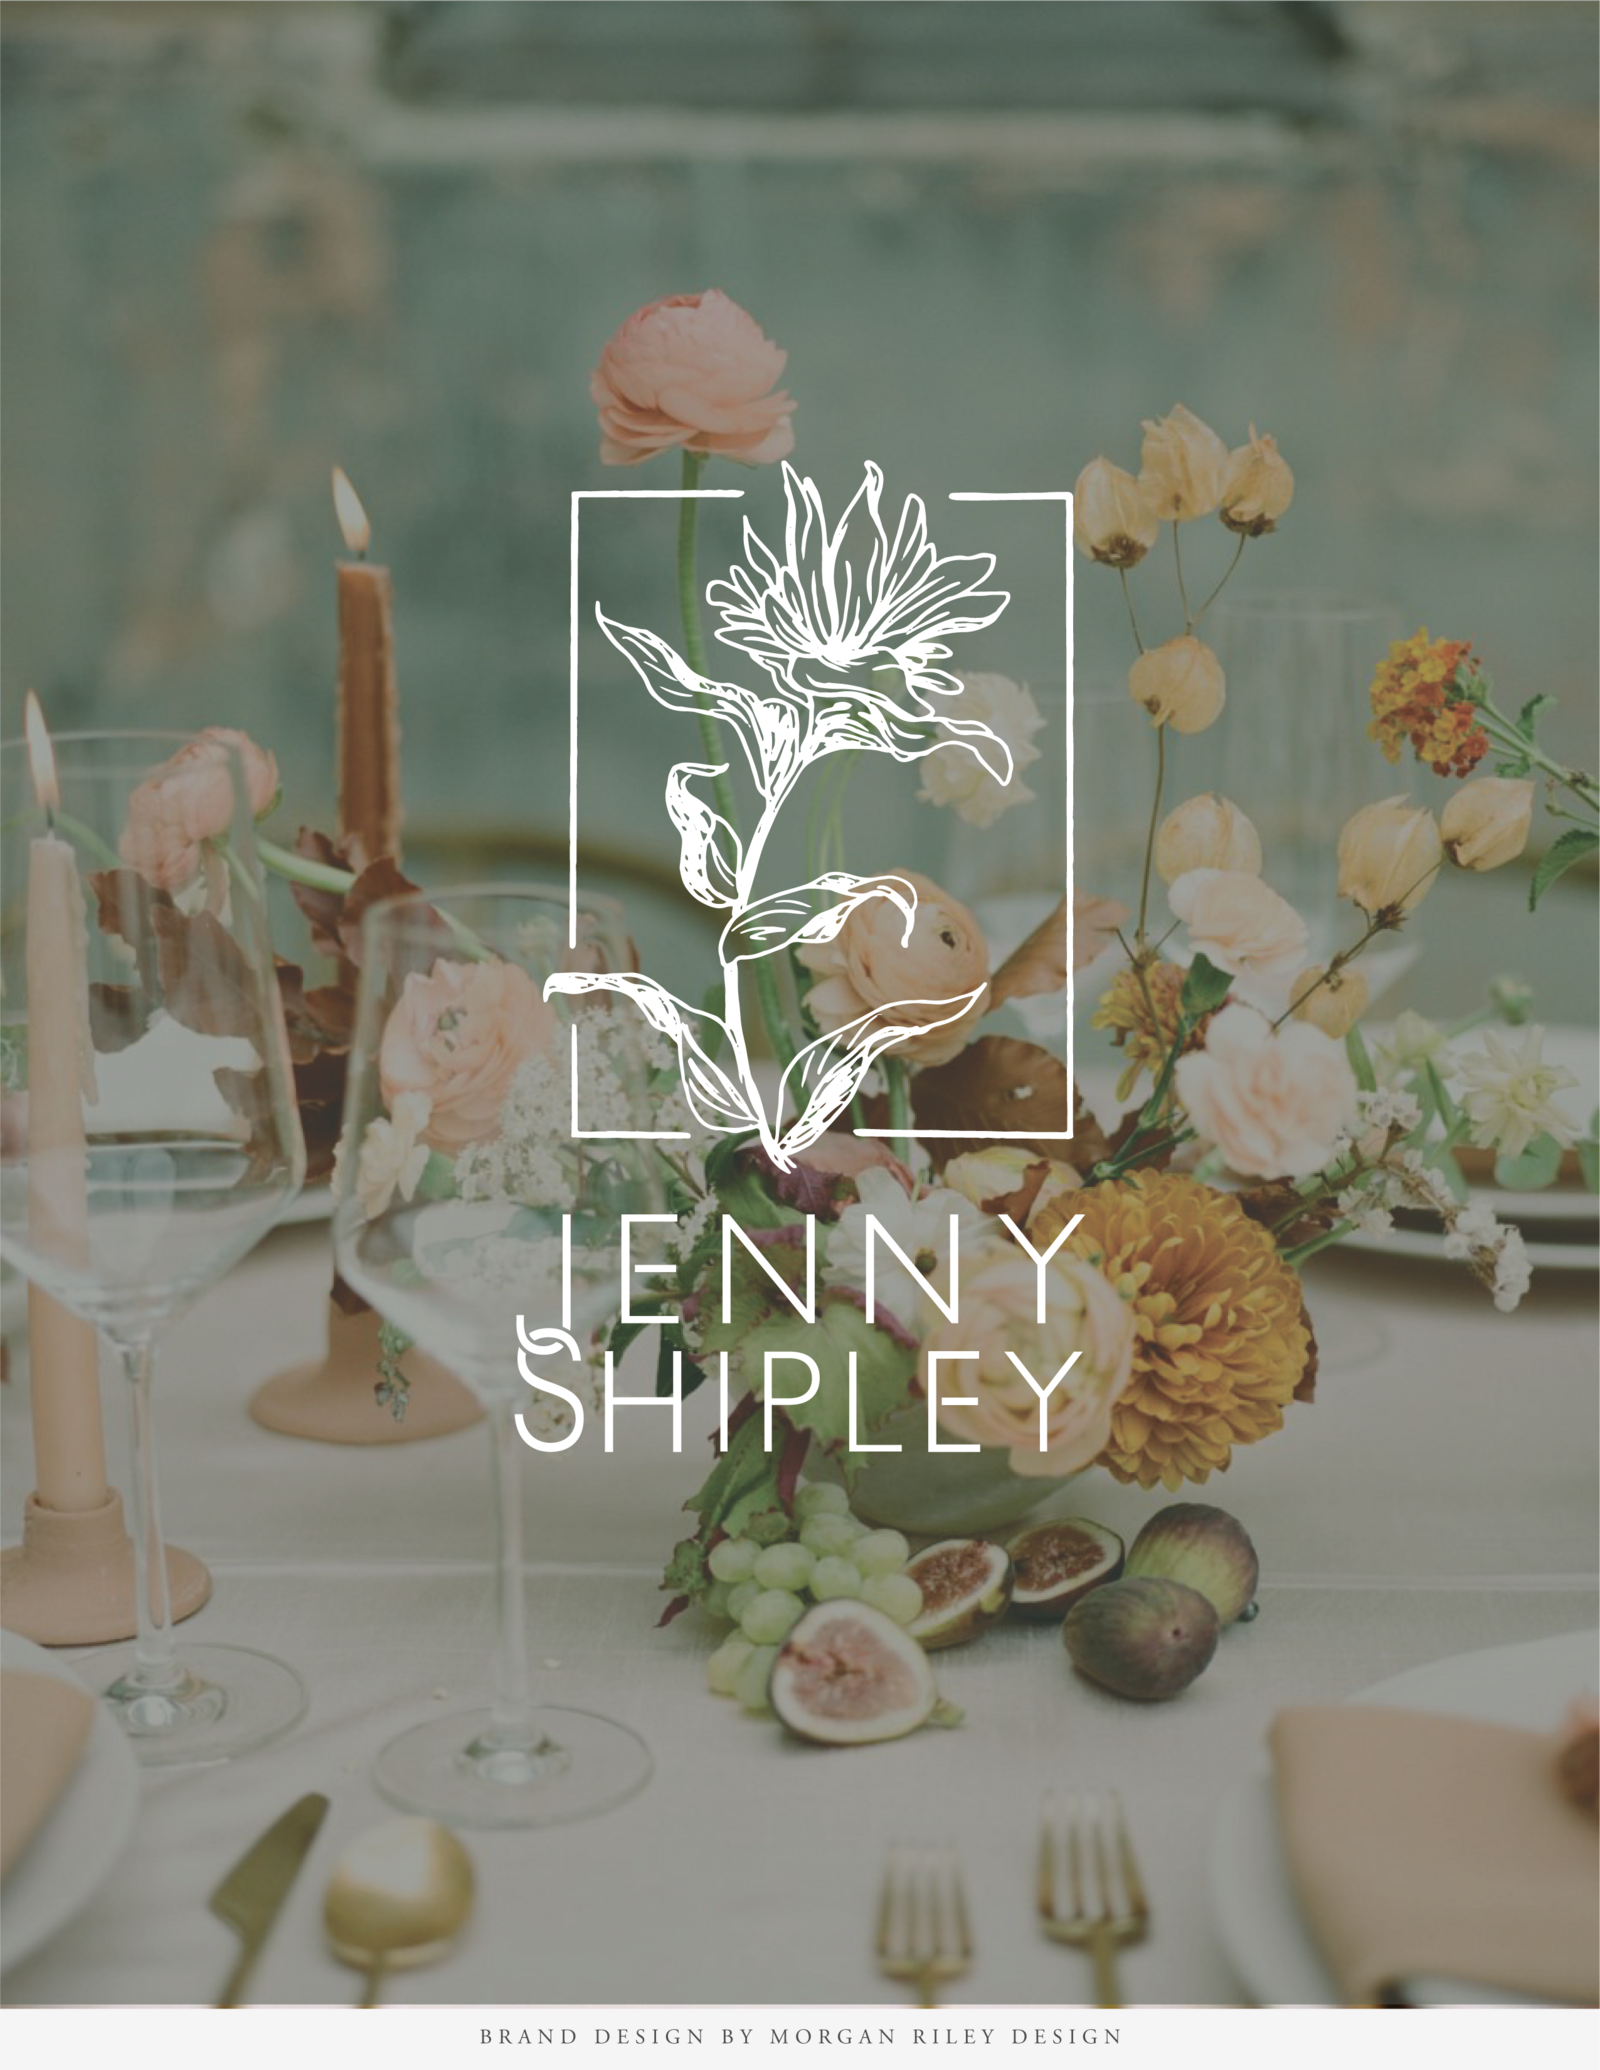 Jenny Shipley Design Board